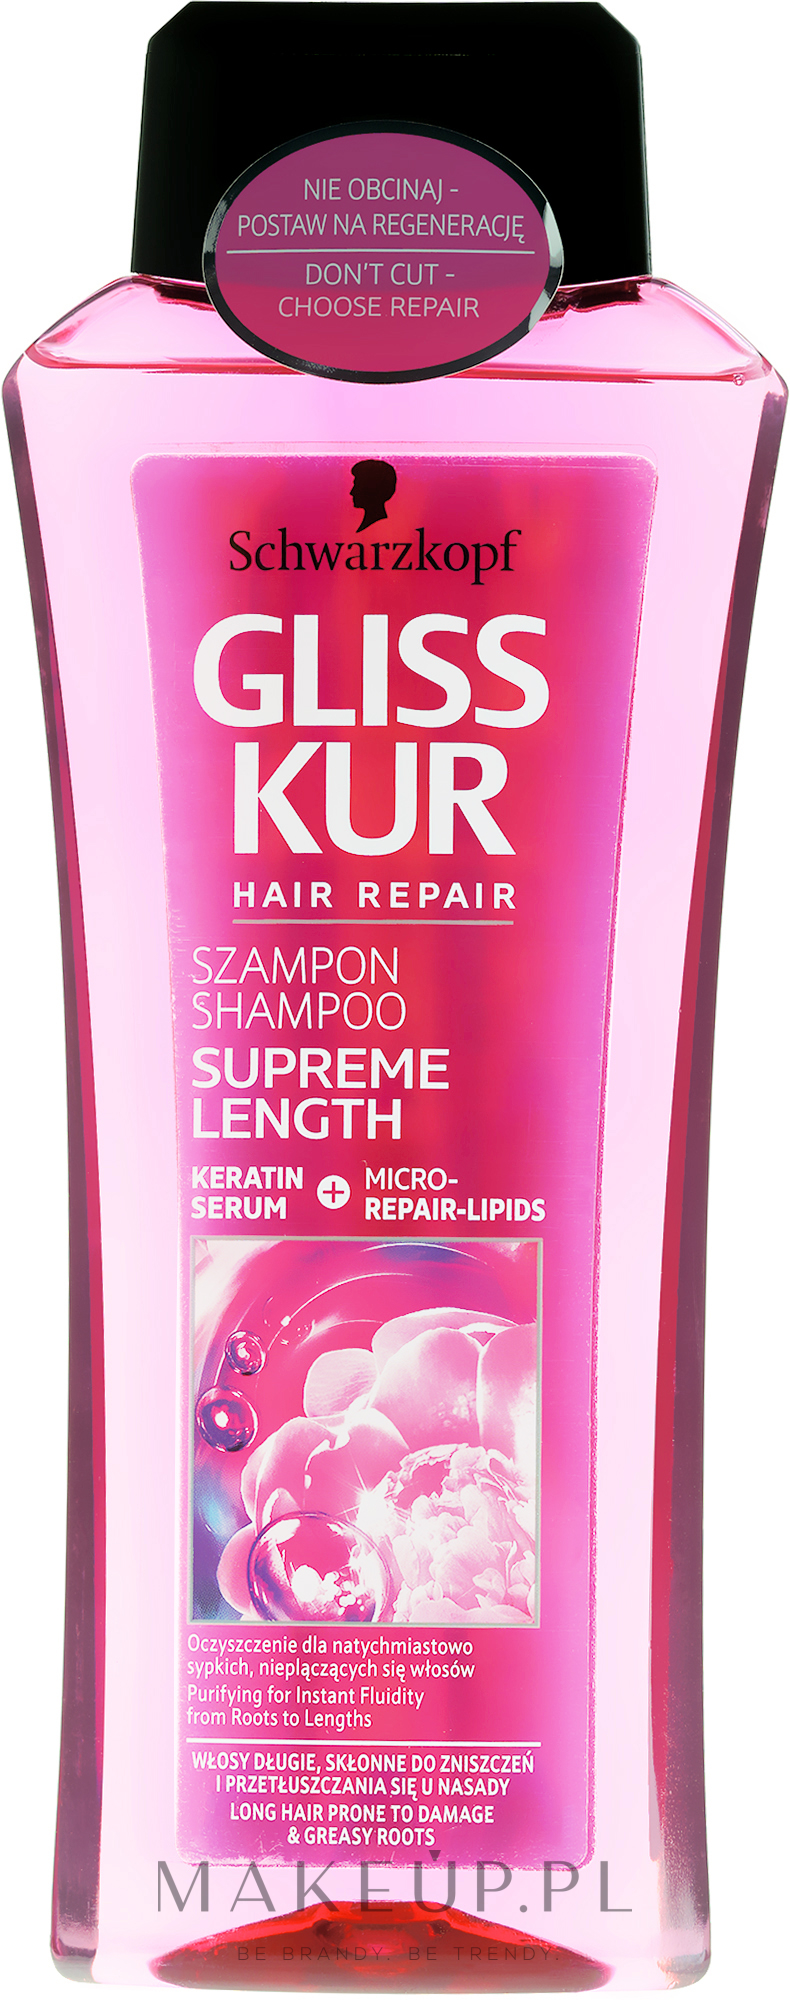 gliss kur supreme length szampon opinie